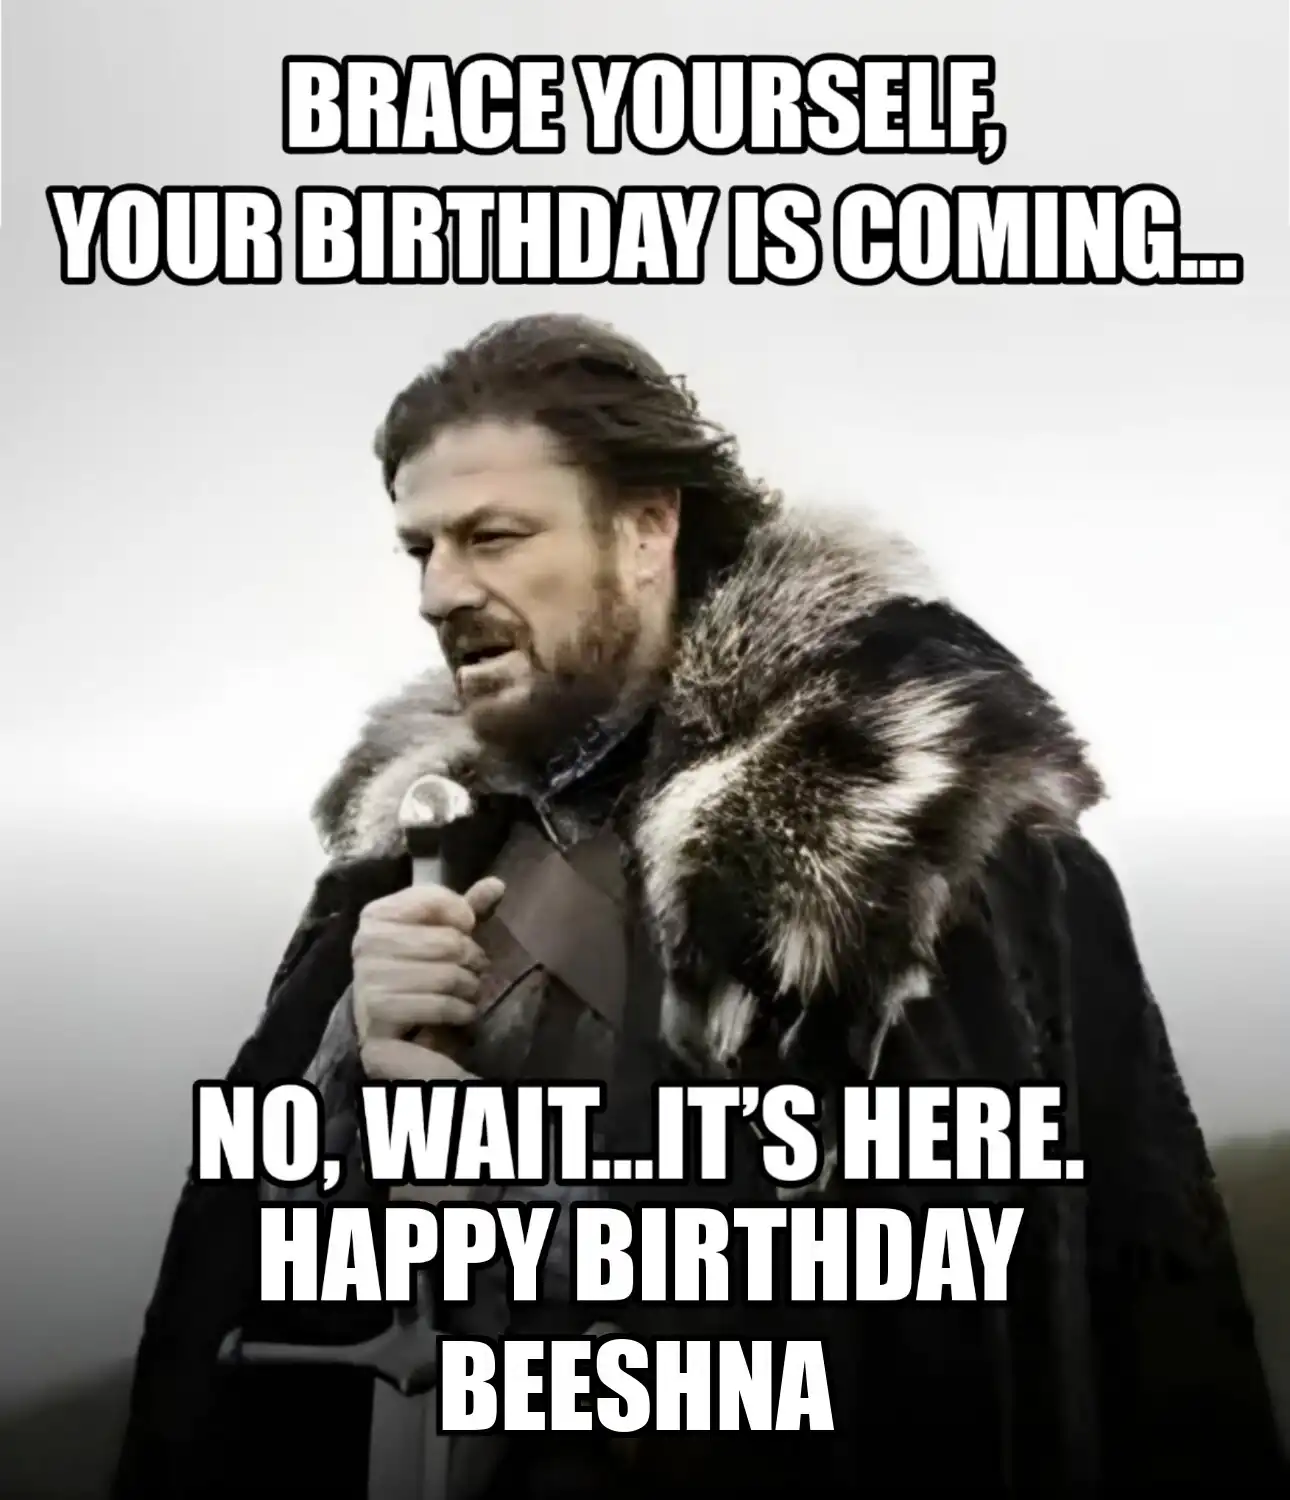 Happy Birthday Beeshna Brace Yourself Your Birthday Is Coming Meme